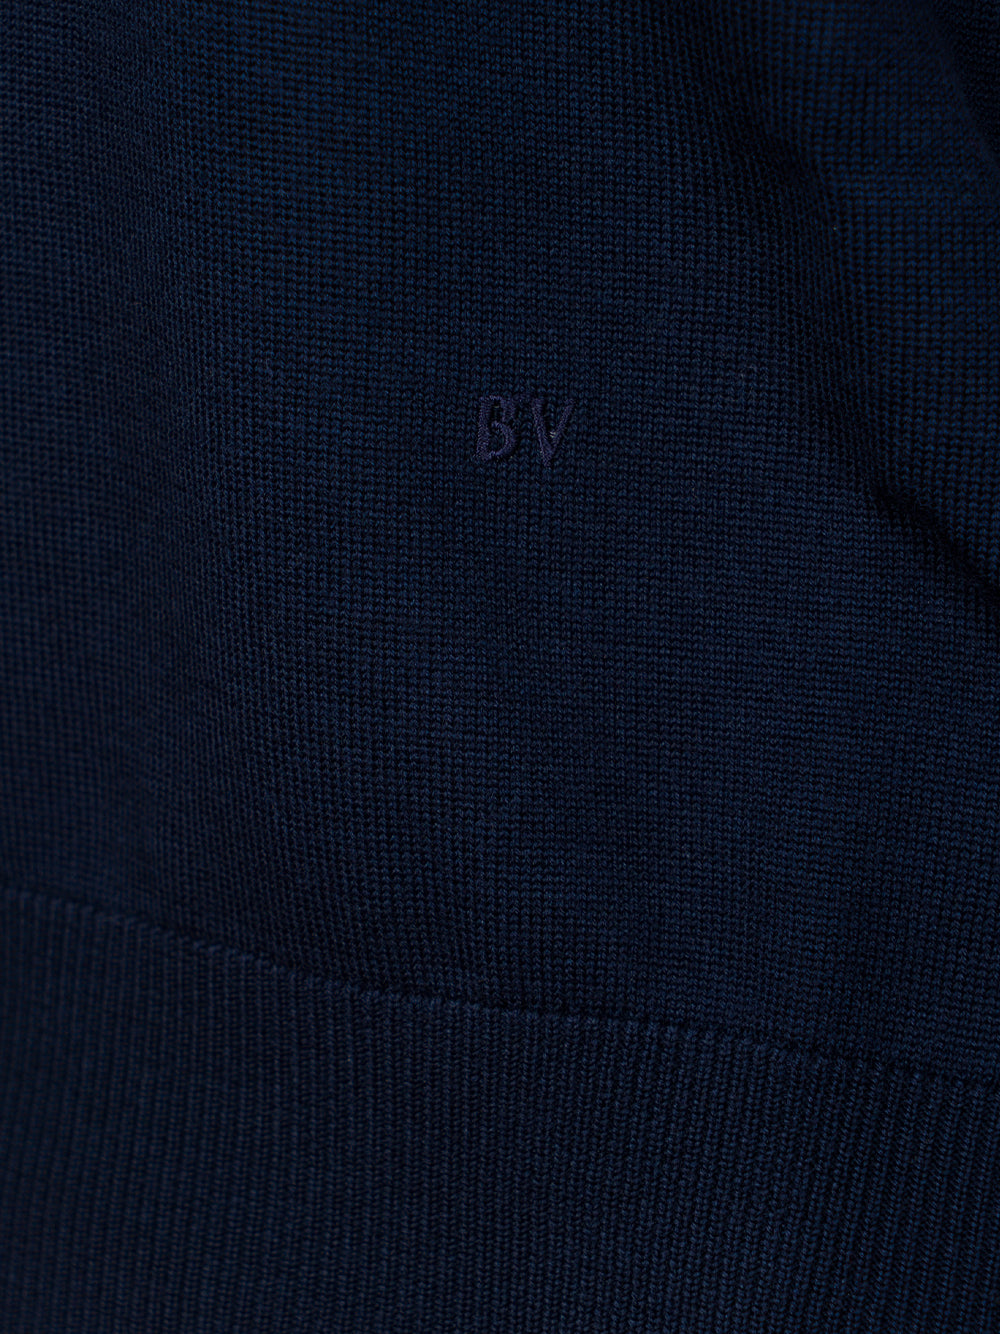 Jersey de lana bordado "Bv"